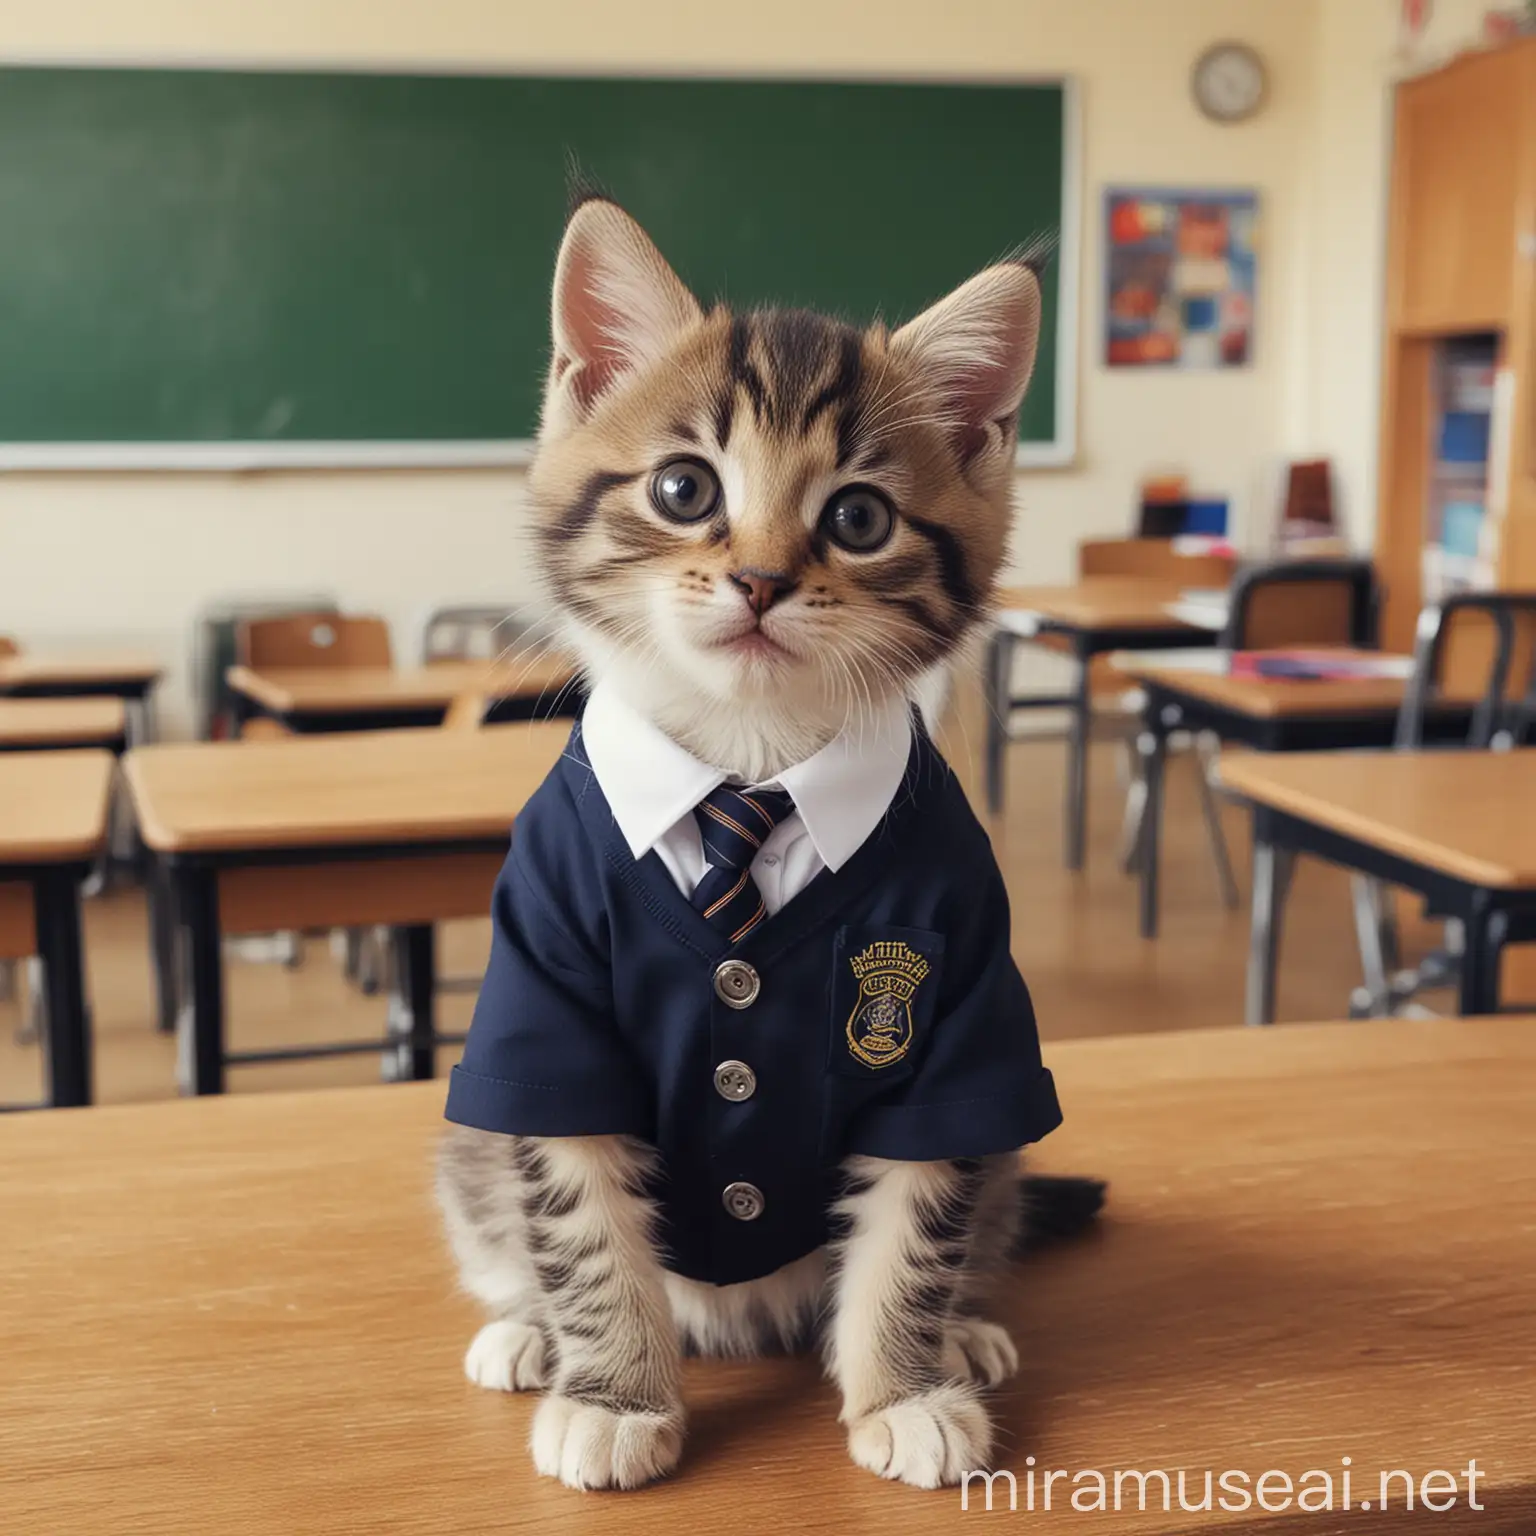 Image of a kitten, preparing for school, in a school uniform,in aclassroom setting 